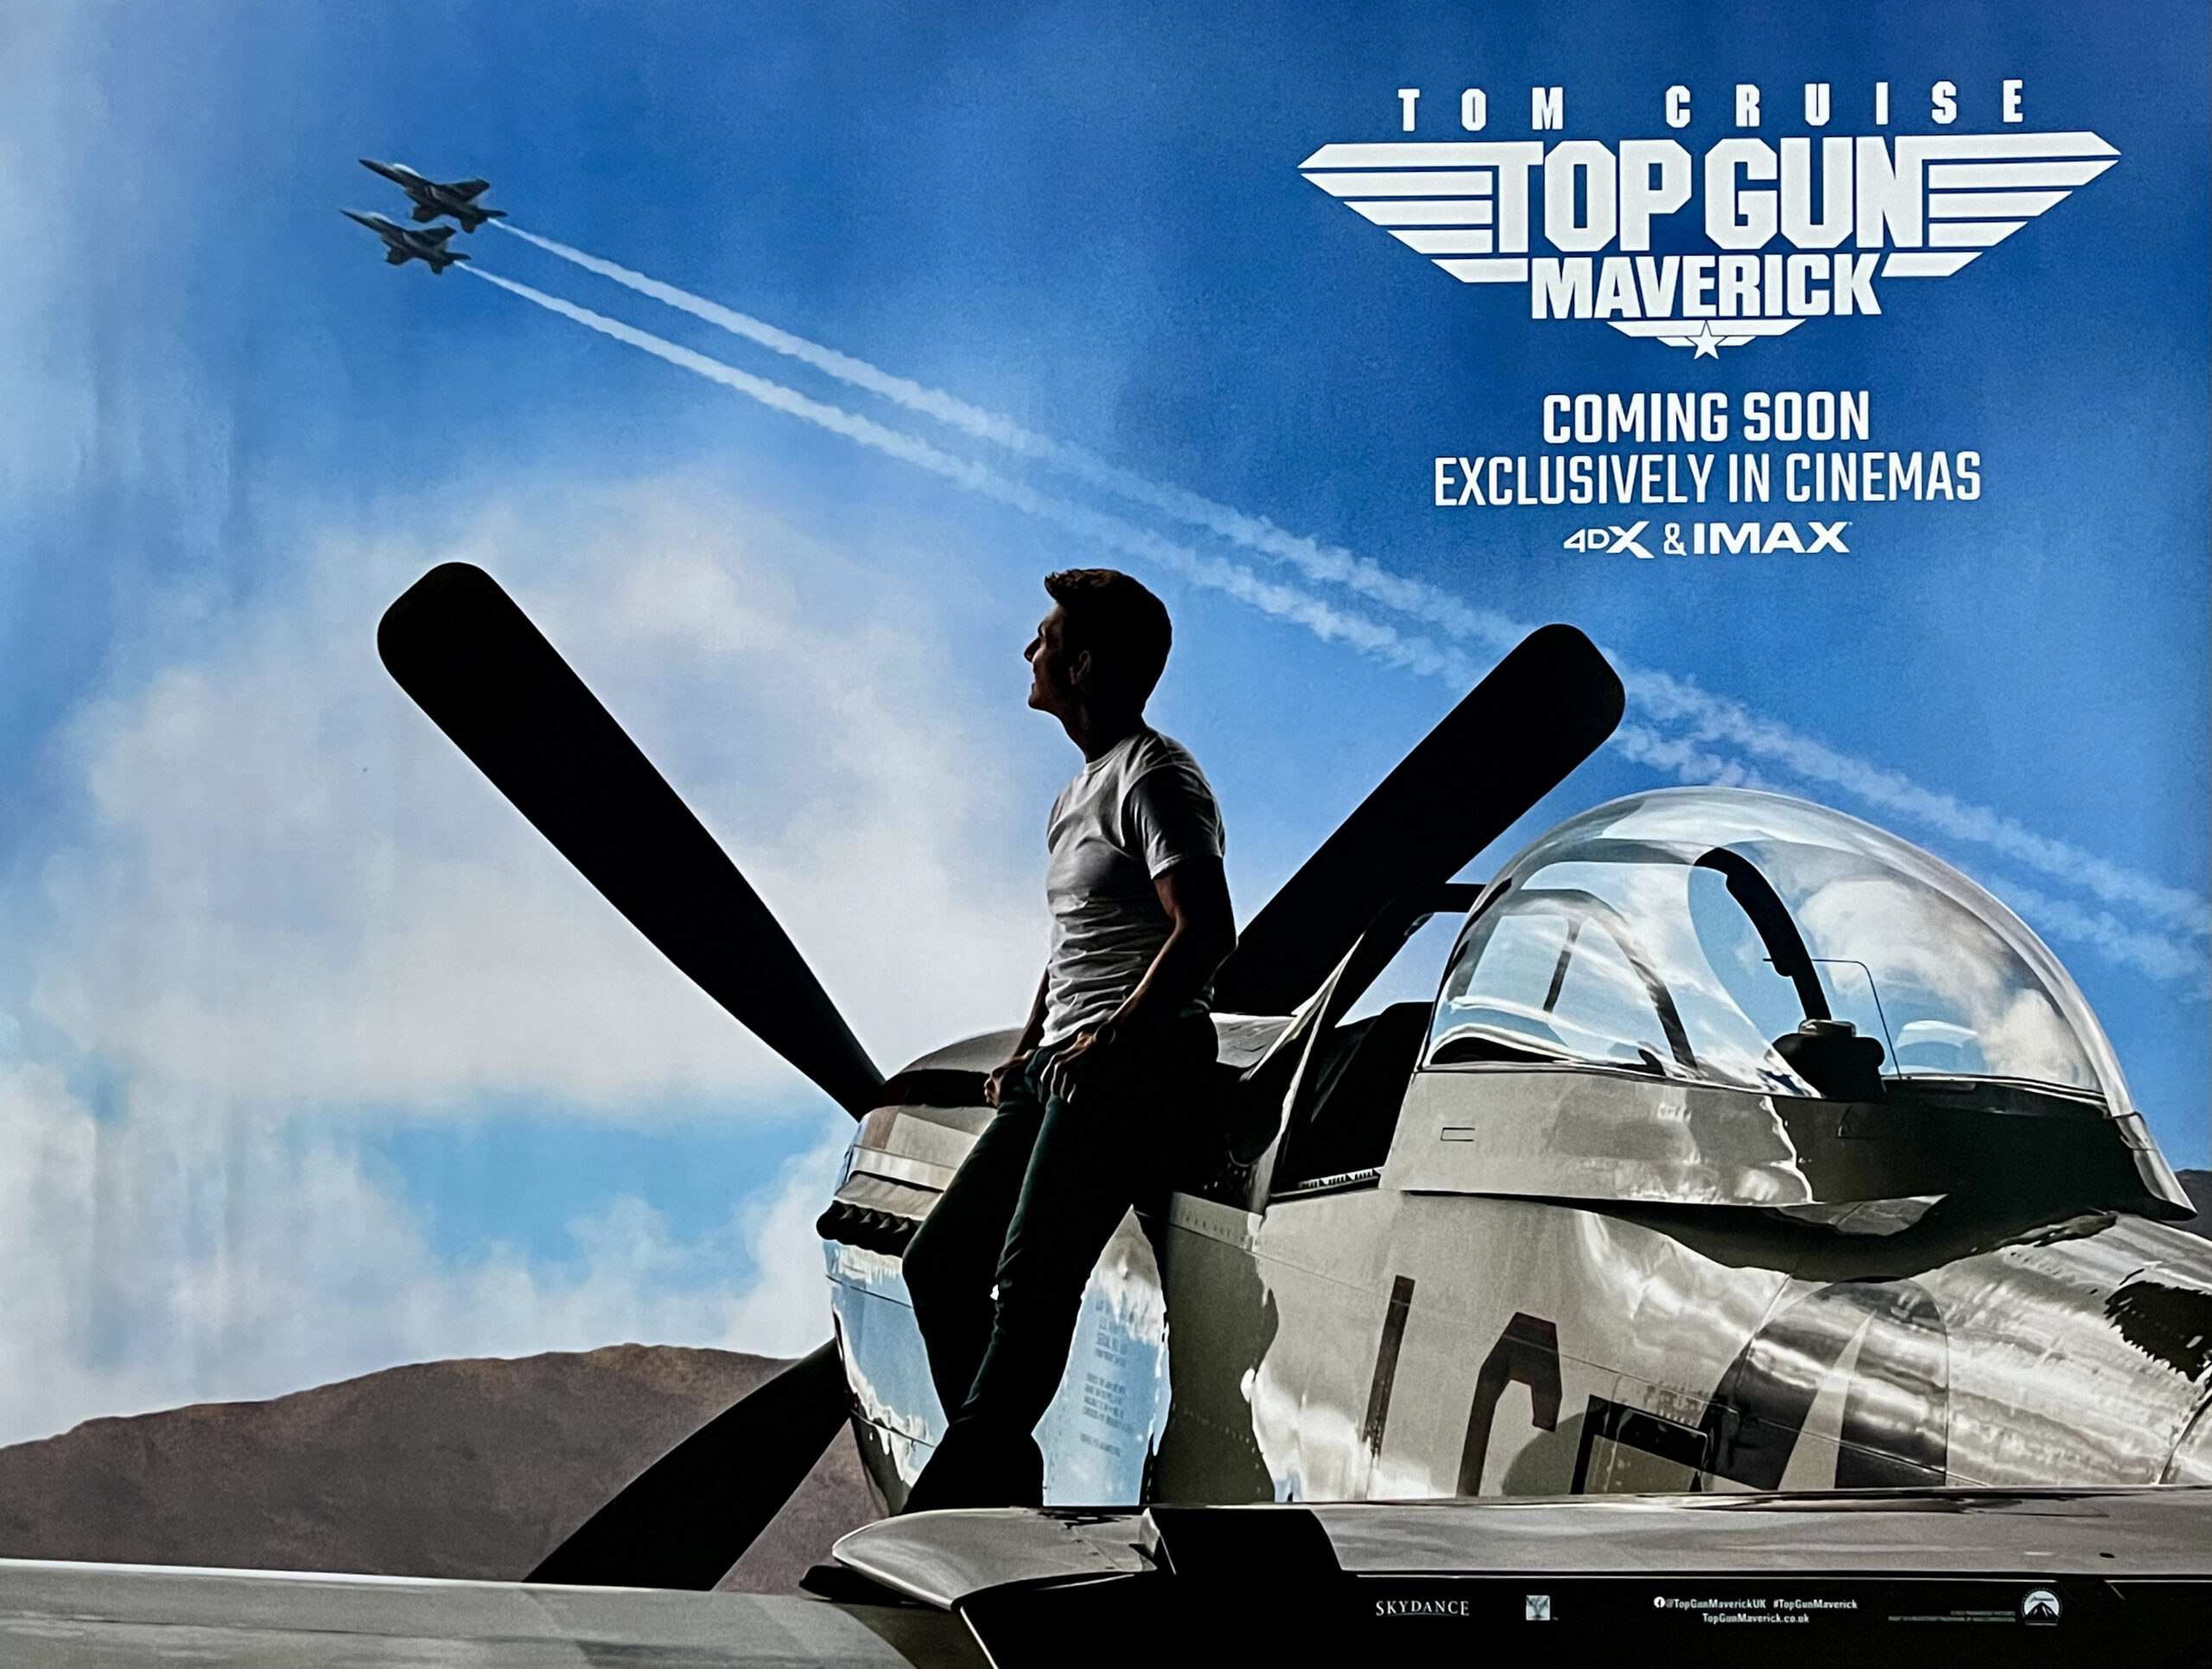 Official Top Gun Movie Poster